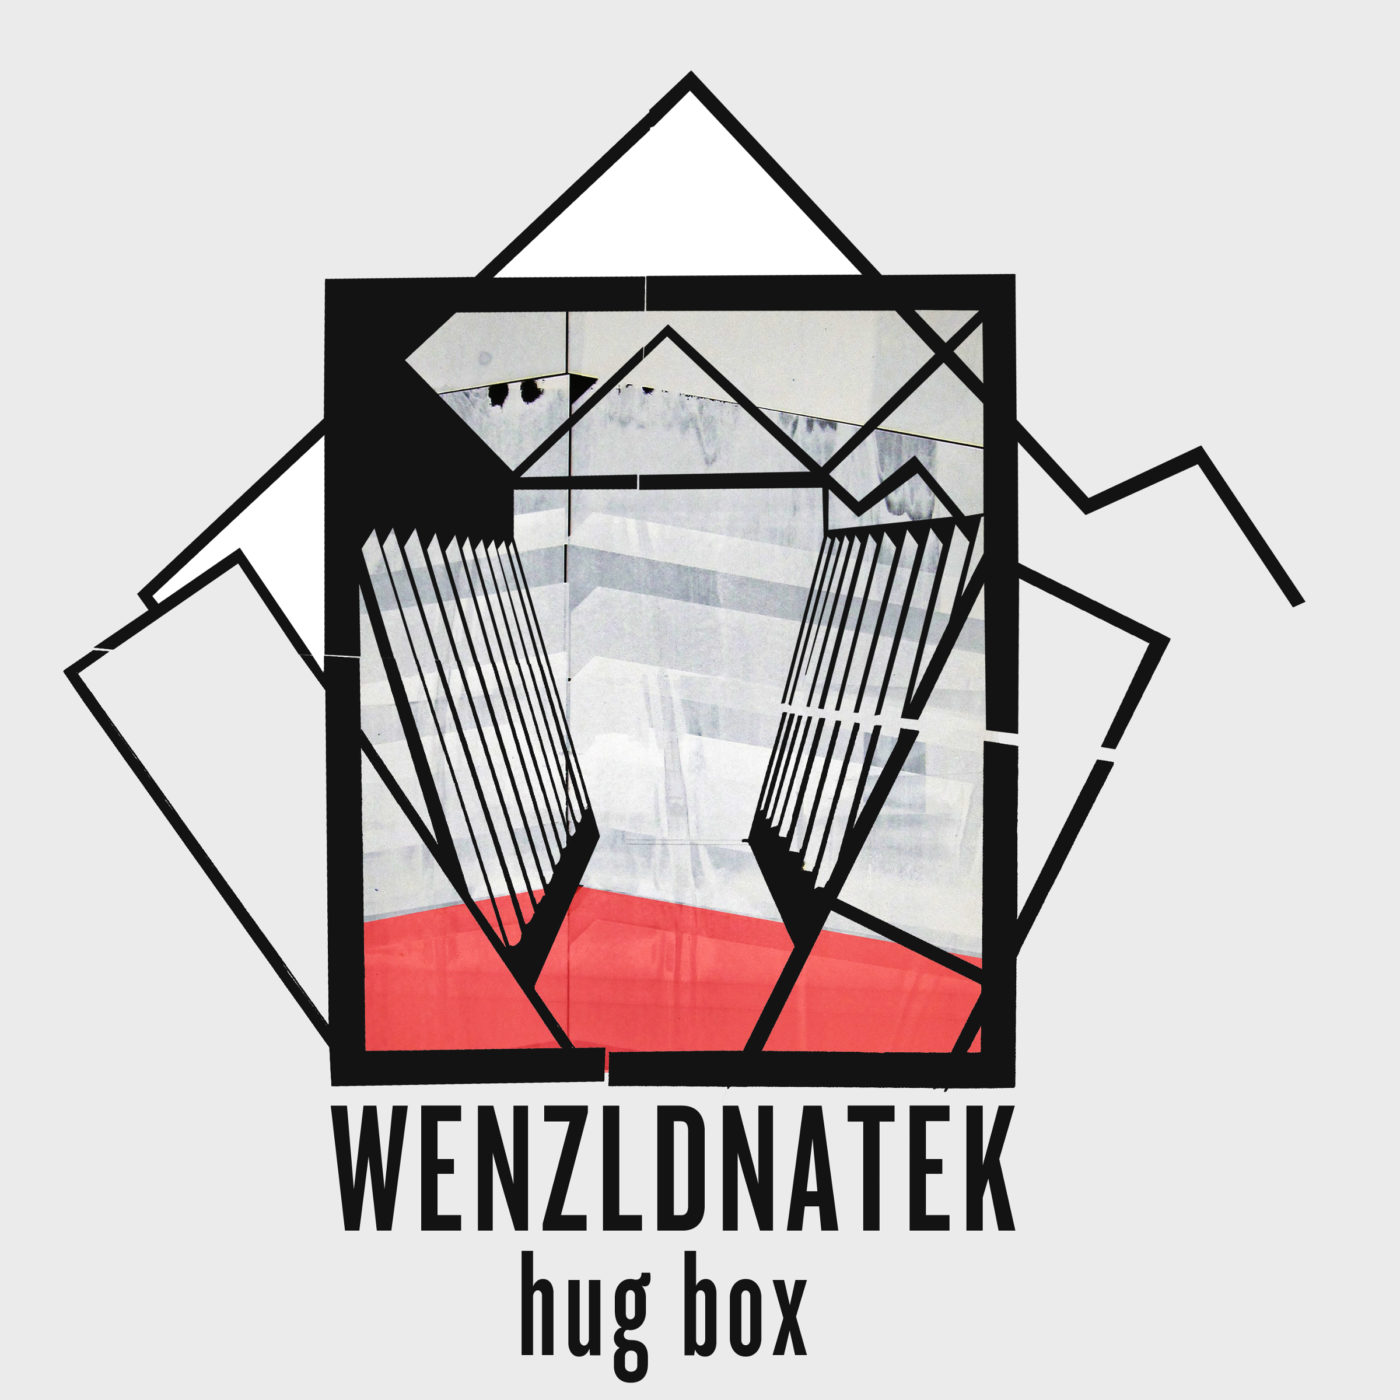 Wenzl Dnatek – “hug box” out now!